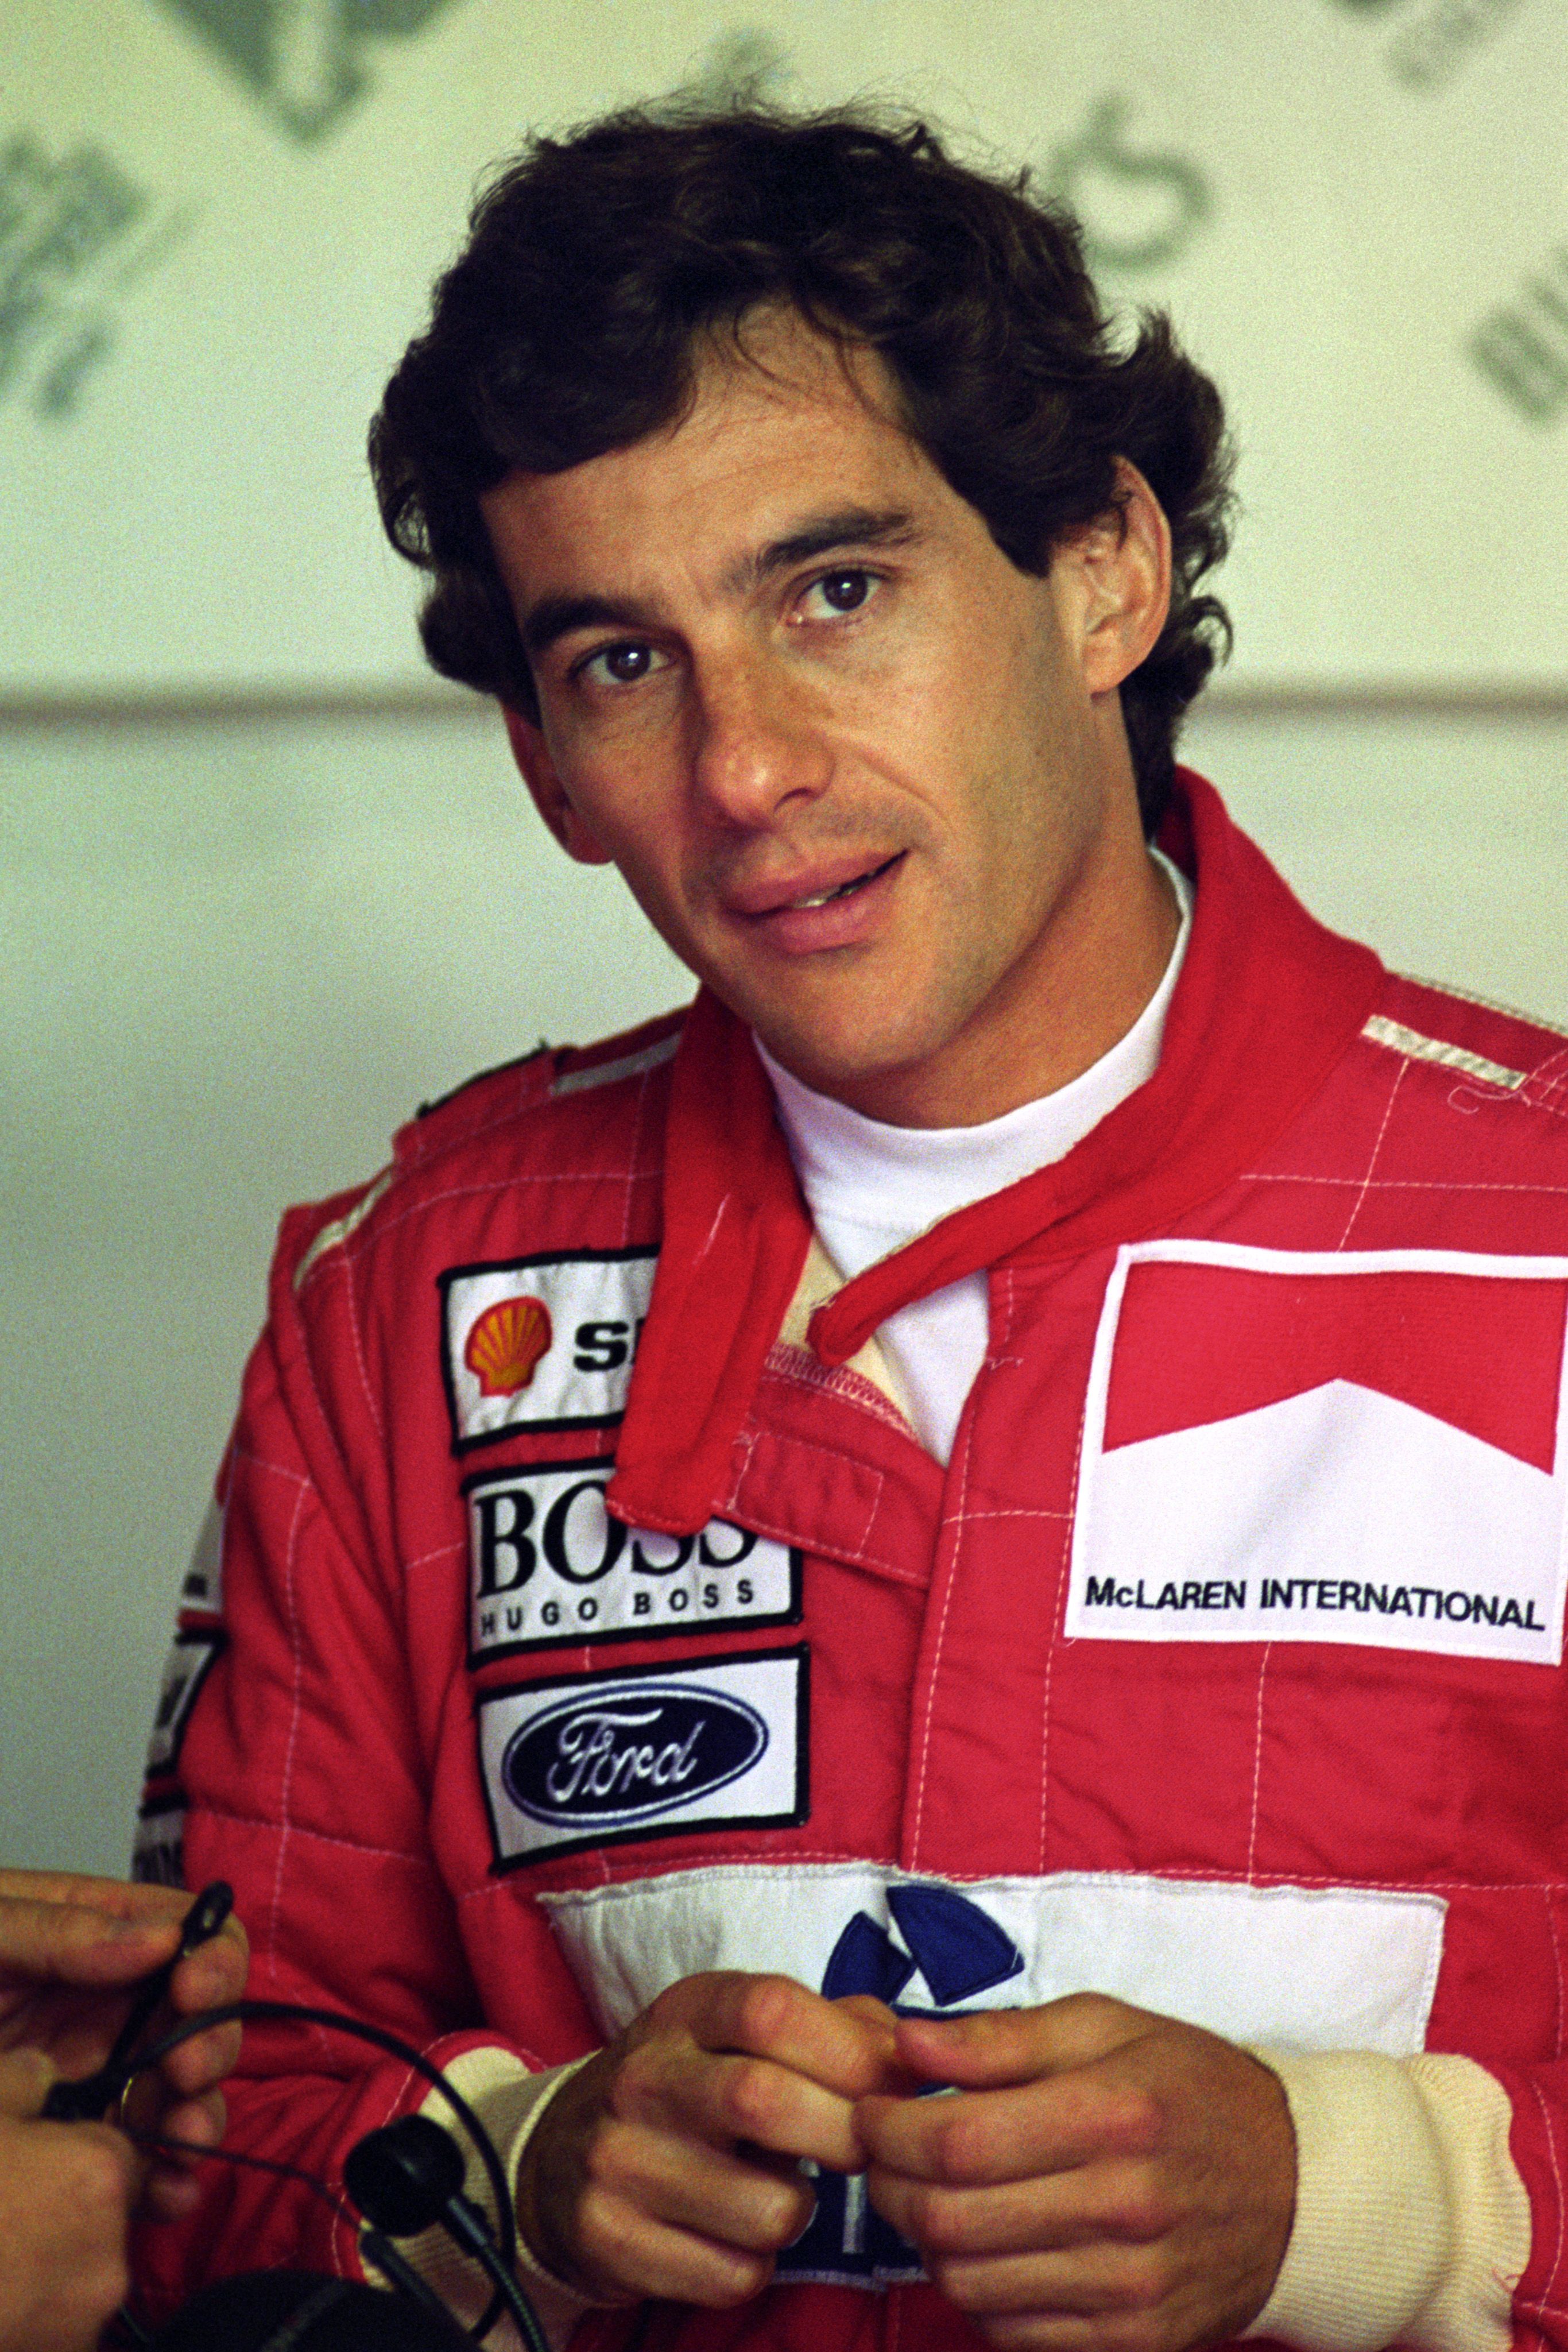 Gran Turismo 6 terá kart e Lotus 97T de Ayrton Senna